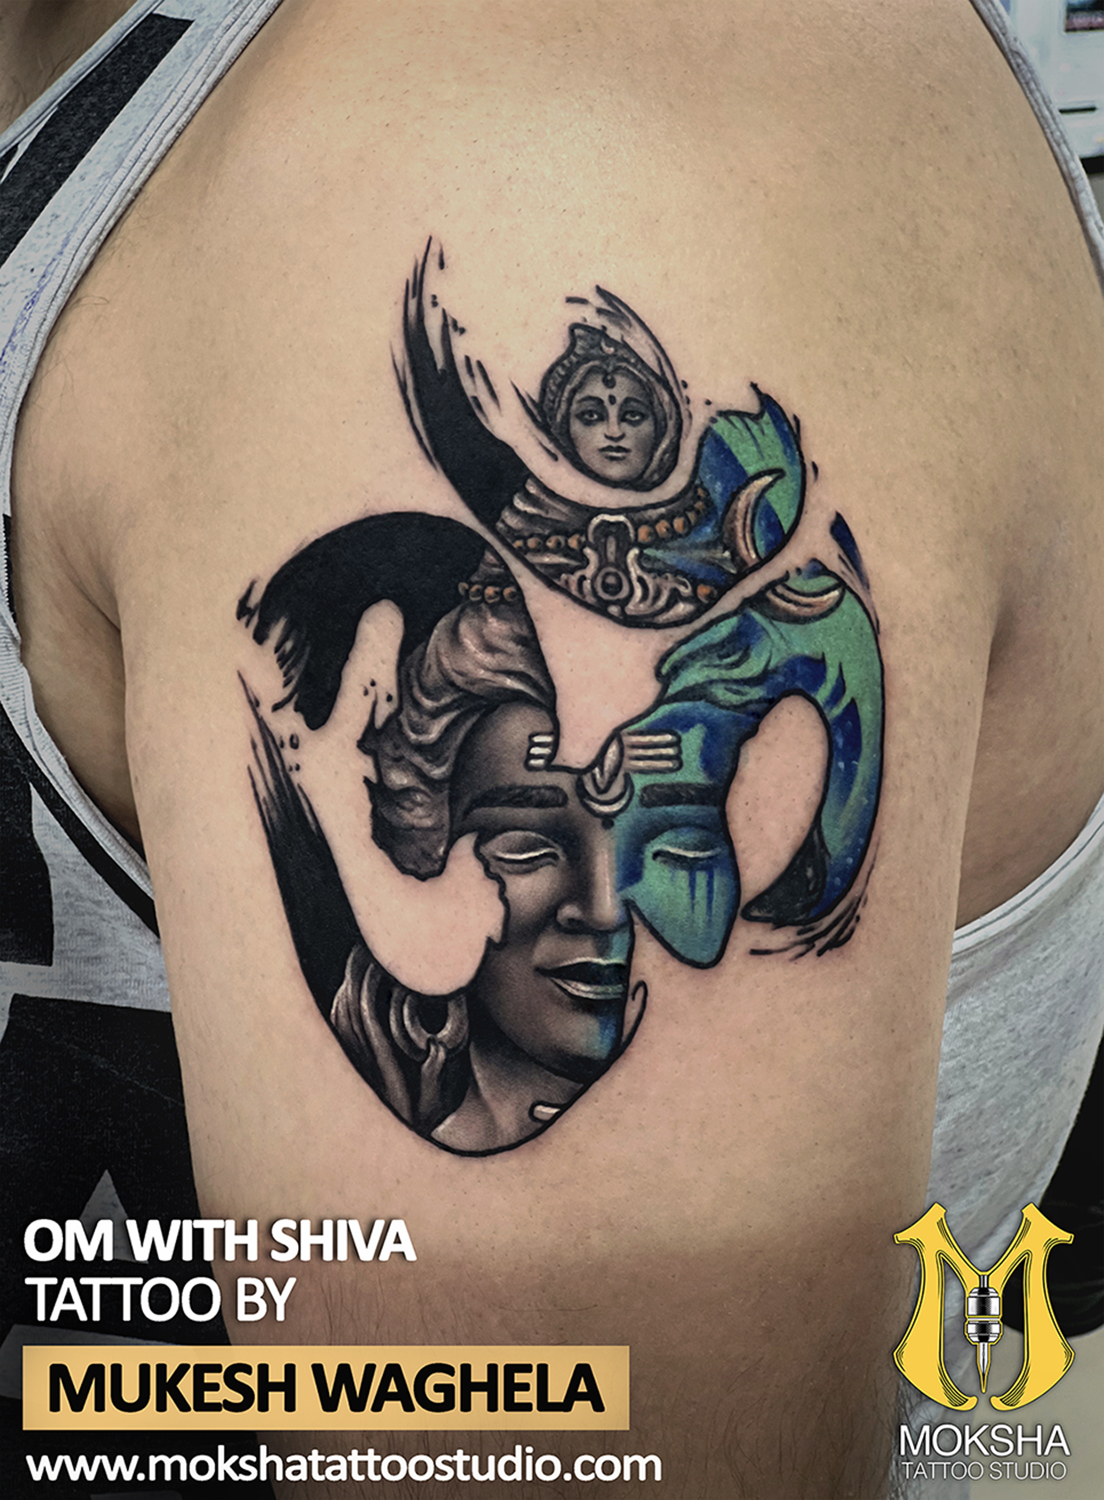 Tattoo uploaded by Guru • Lord shiva tattoo , orignally designed and done  at TATTOO TRENDS bangalore • Tattoodo